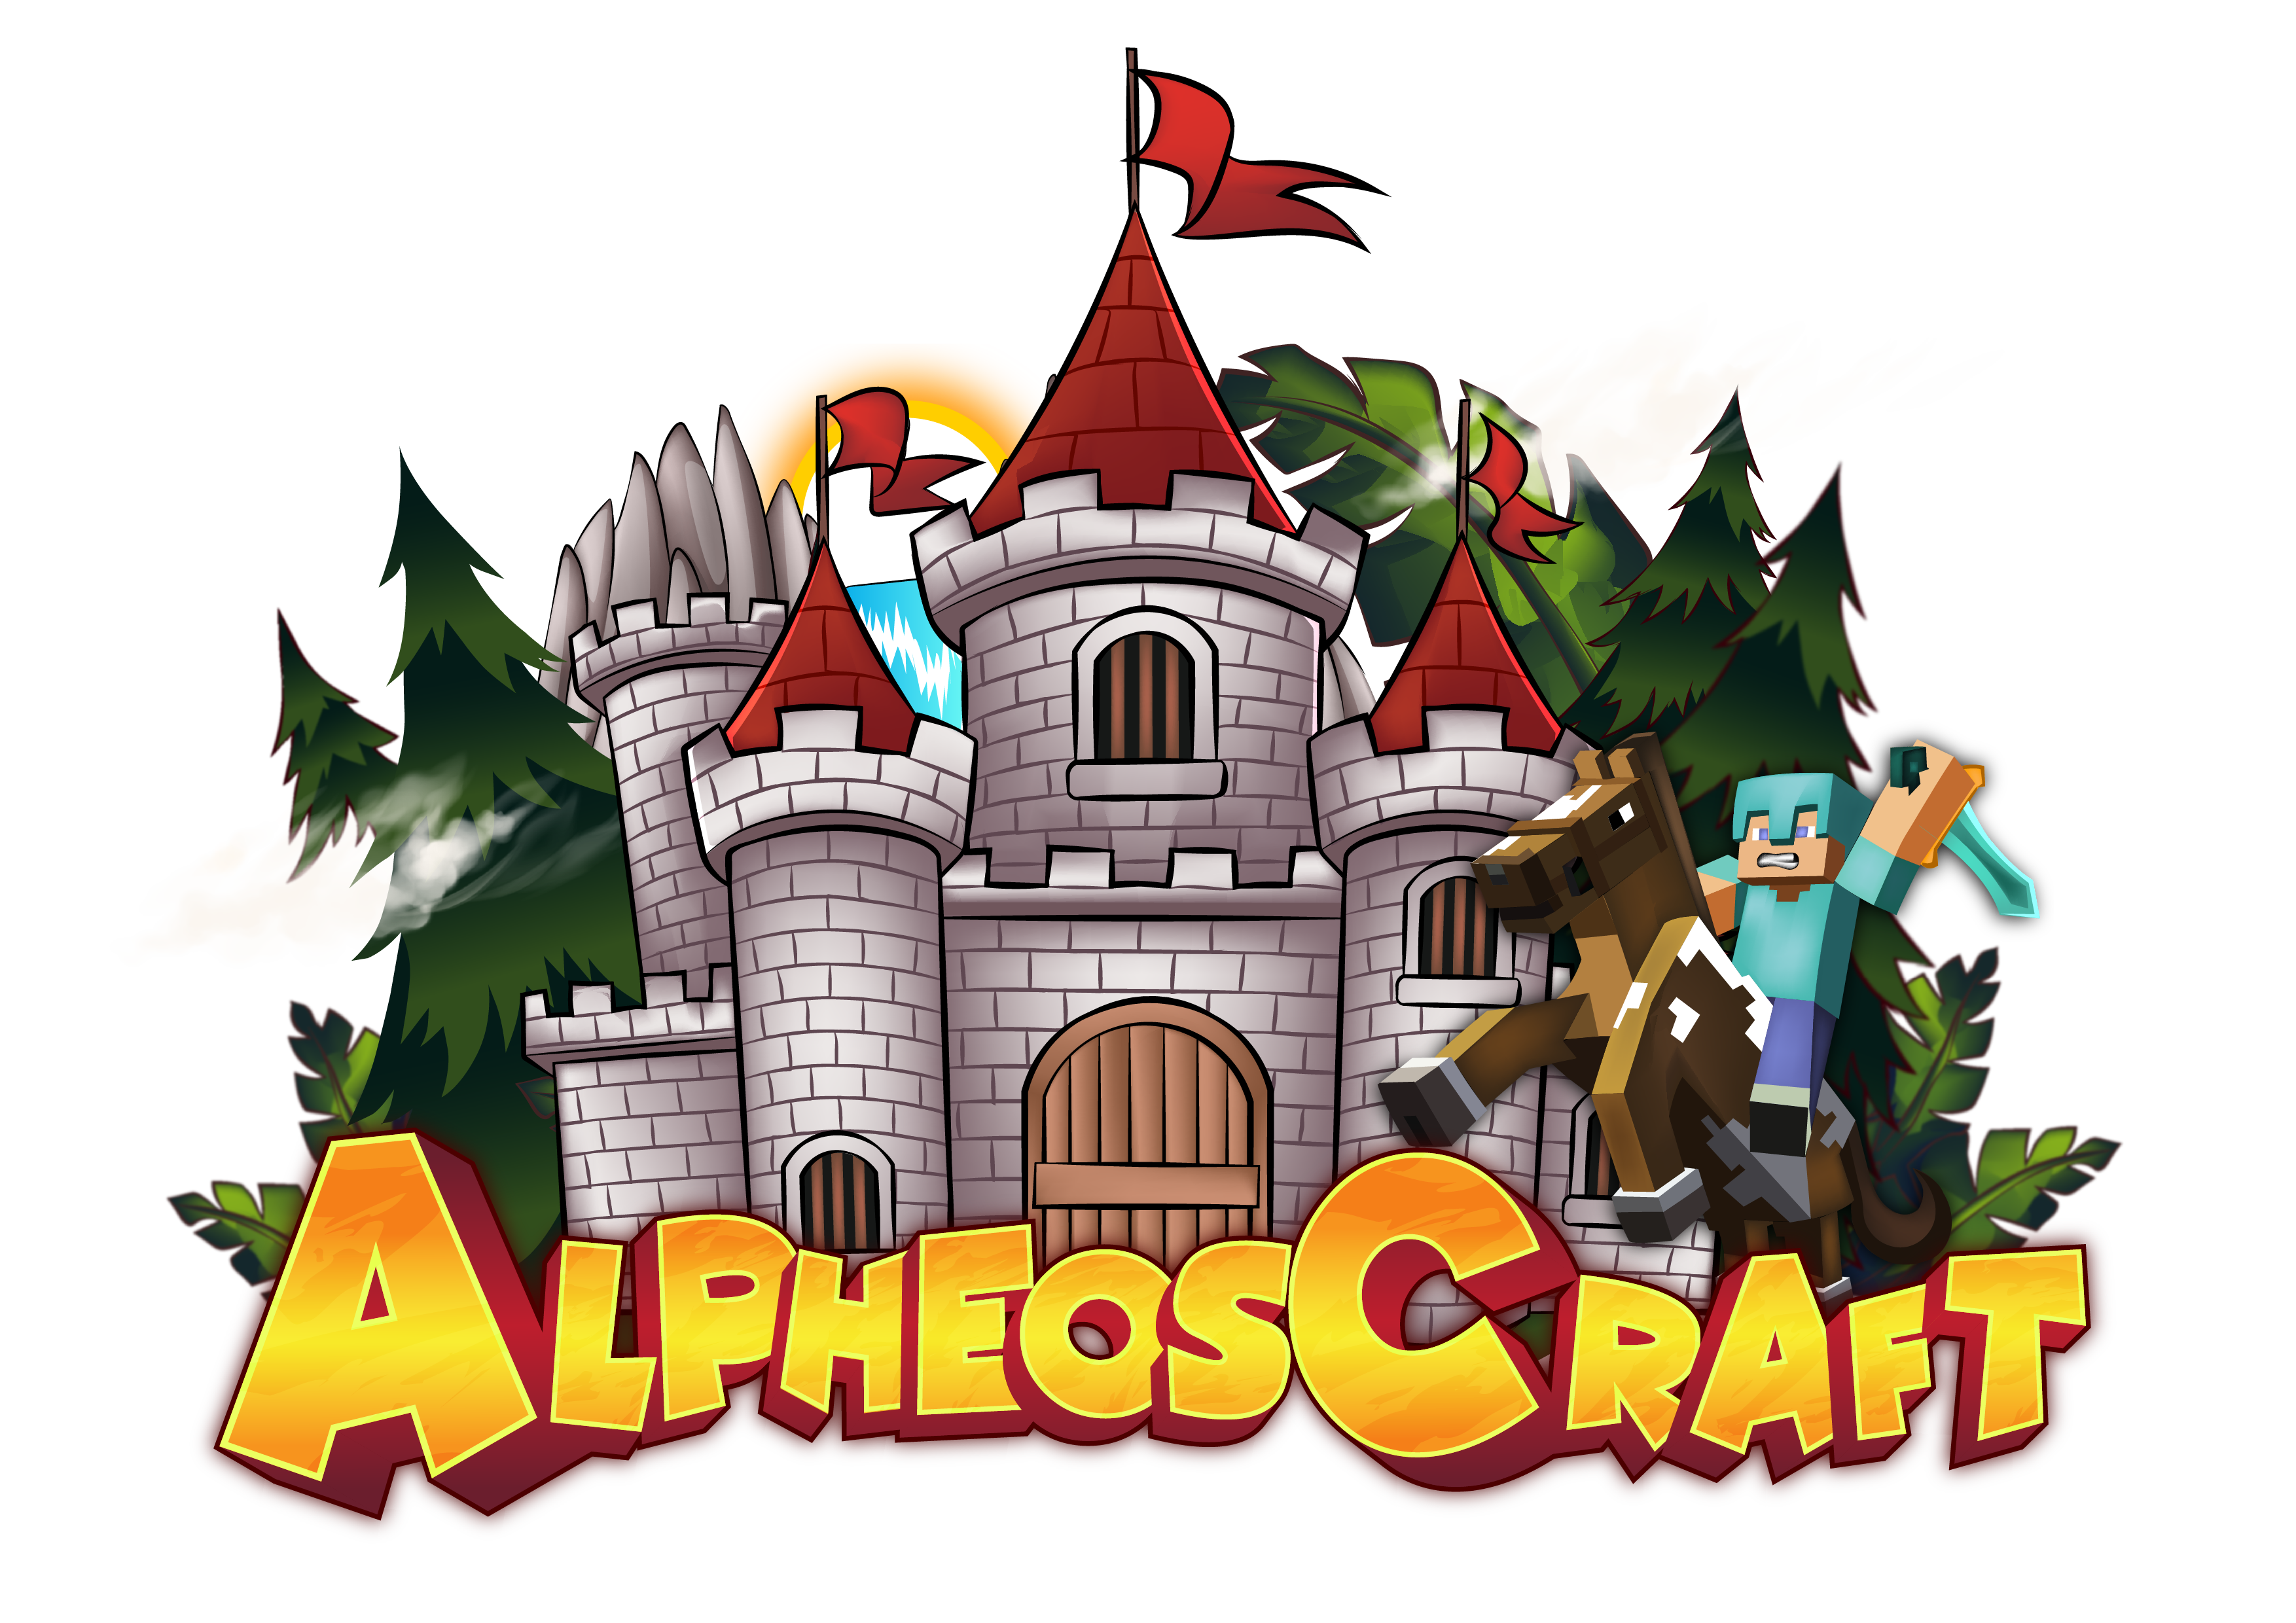 AlpheosCraft